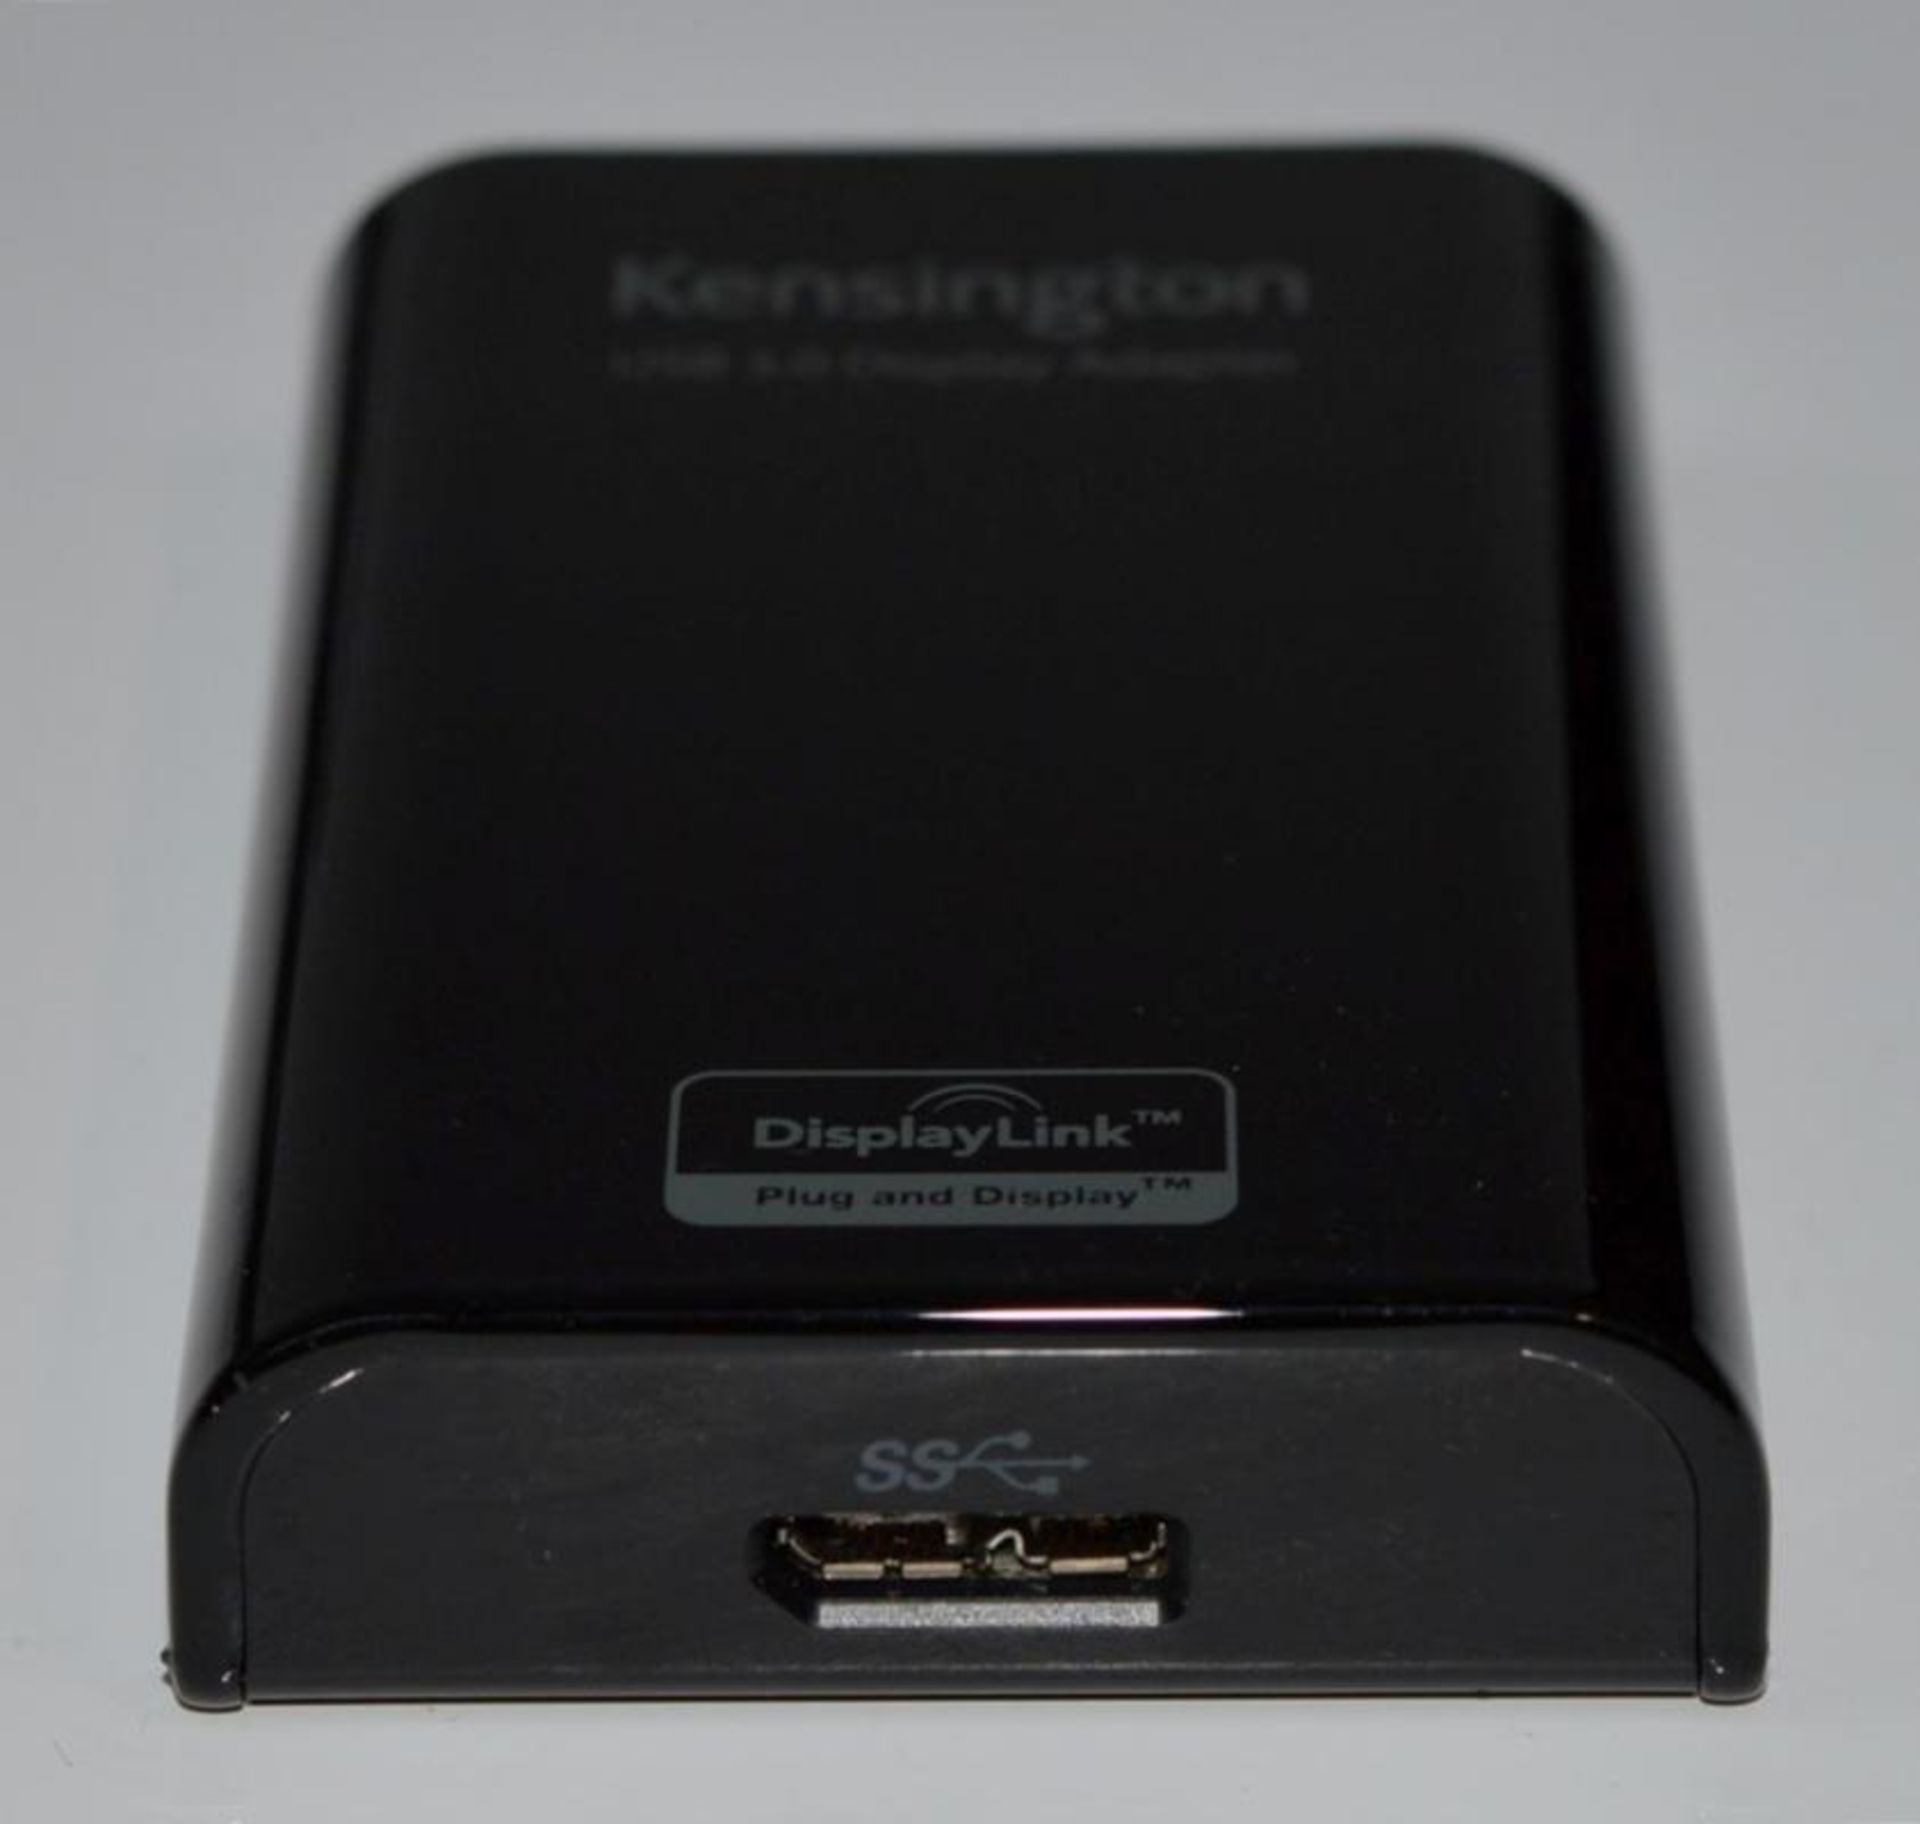 1 x Kensington K33974 USB 3.0 Multi Display Adapter - CL400 - Ref JP288 - Location: Altrincham WA14 - Image 5 of 5